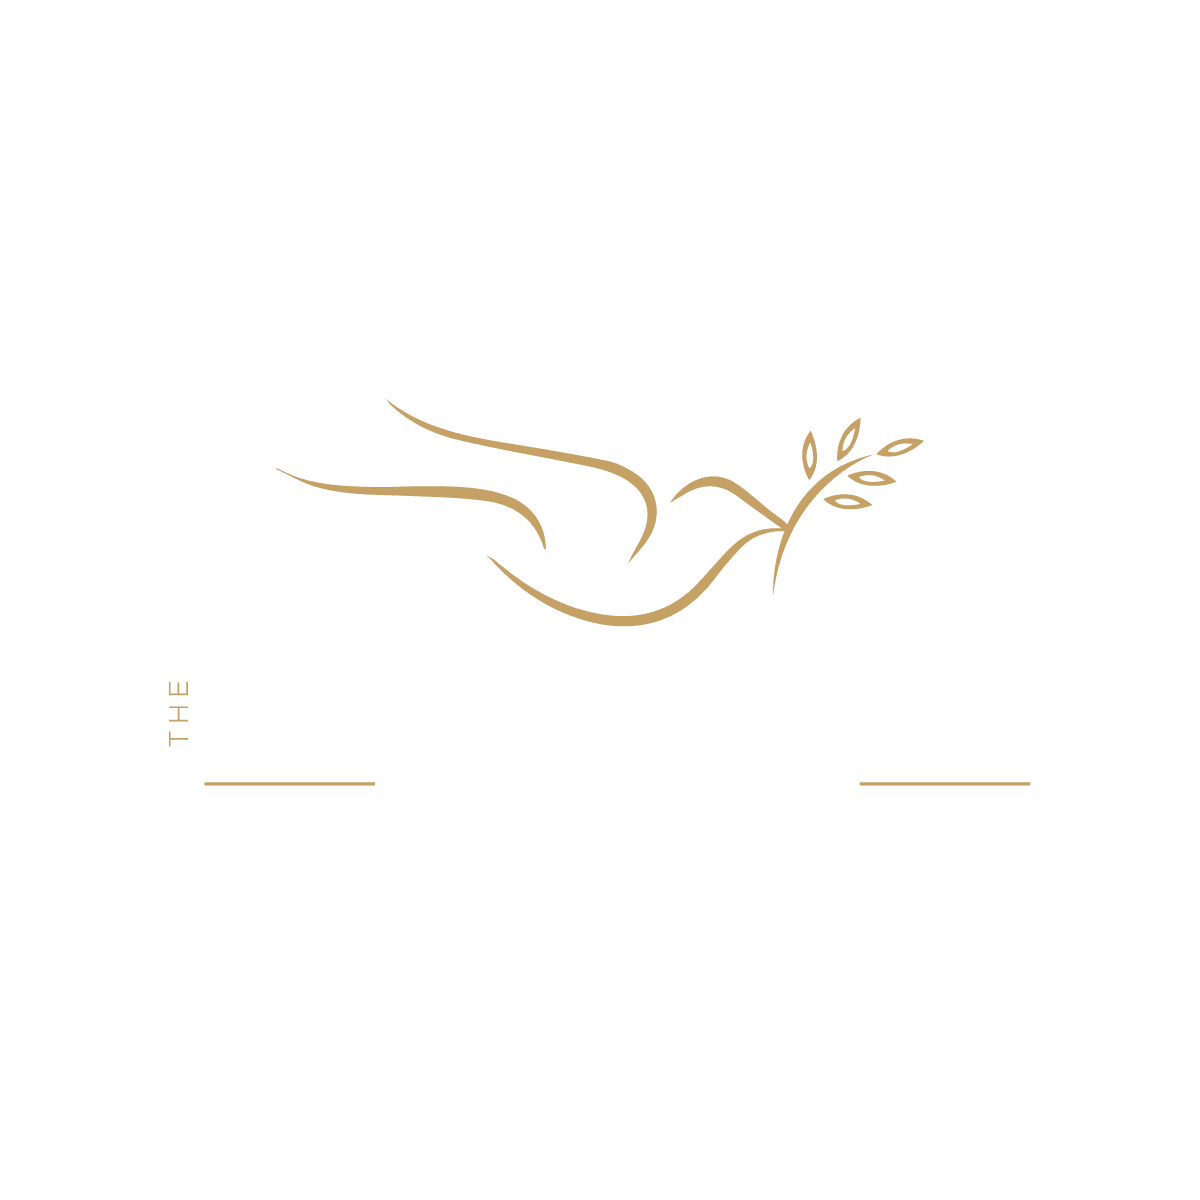 The London Mediation Service